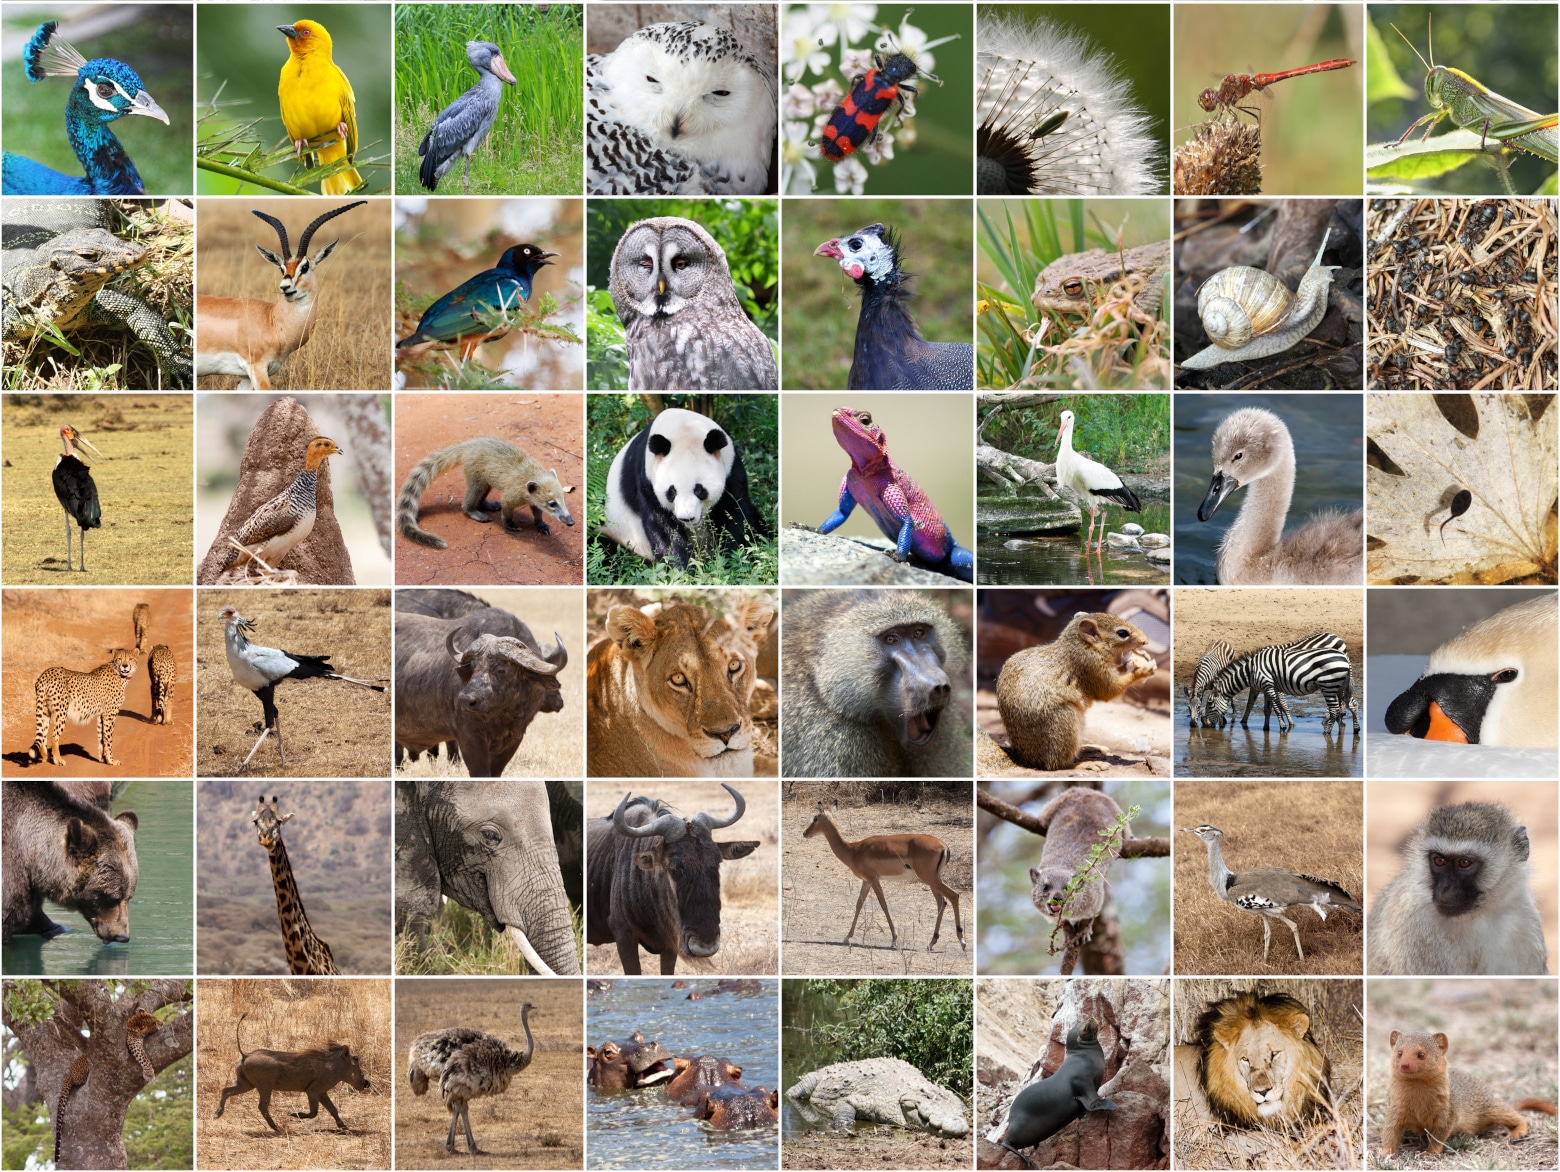 Kategorie Tierarten